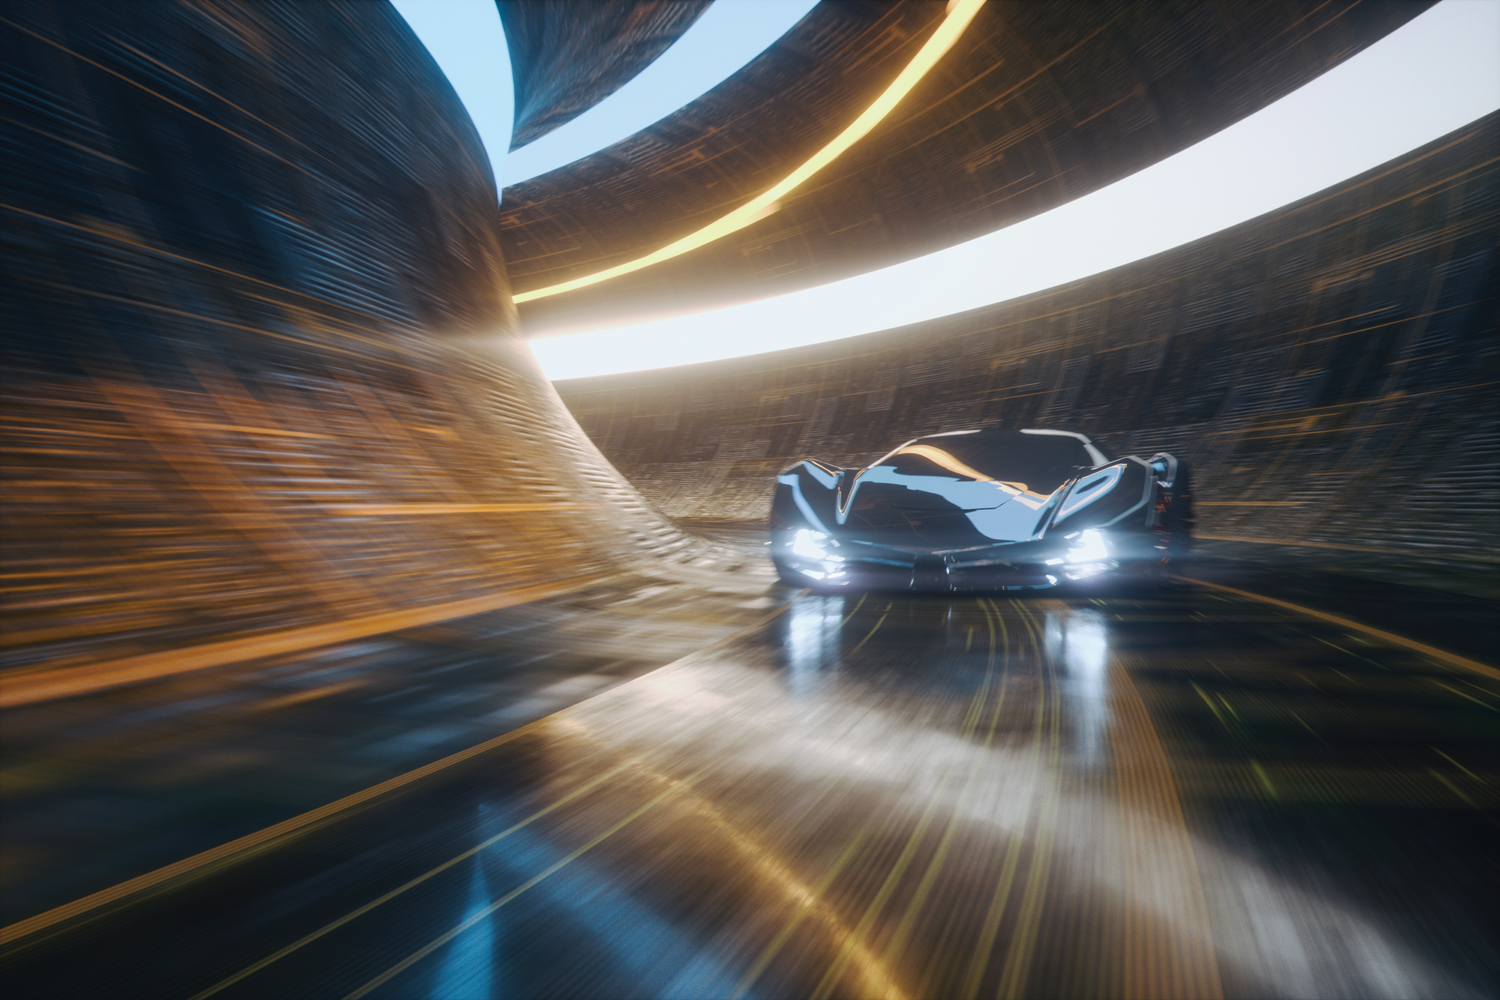 Sport car drifting through the corner in the futuristic tunnel